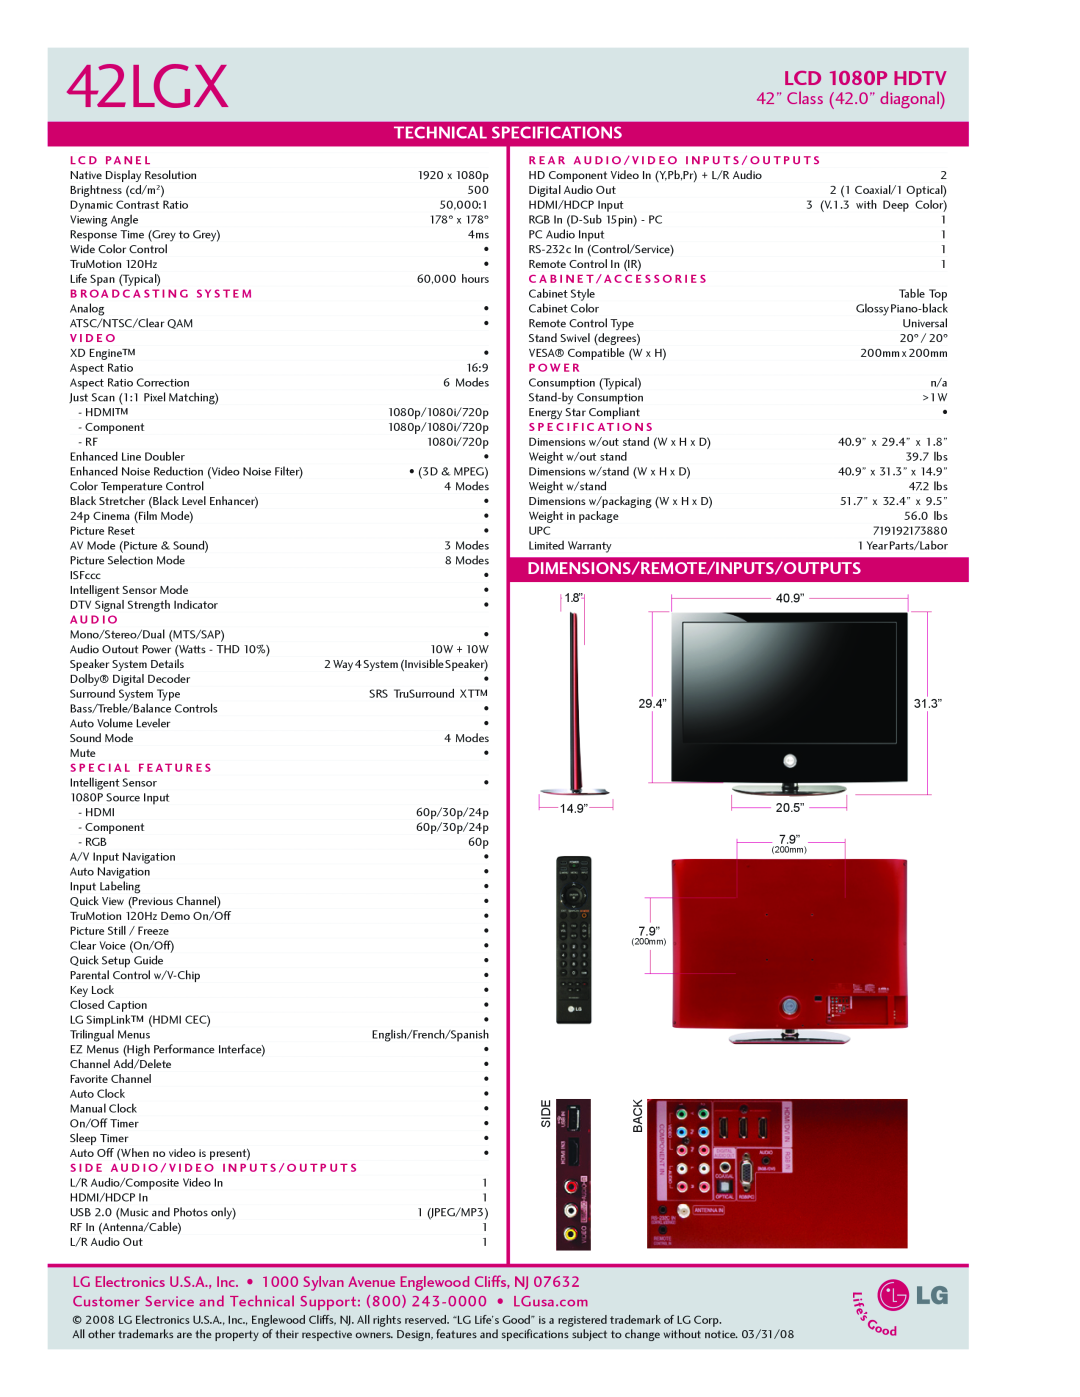 LG Electronics 42X manual 42LGX, LCD 1080p HDTV, 42” Class 42.0” diagonal, Technical, Dimensions/Remote/Inputs/Outputs 